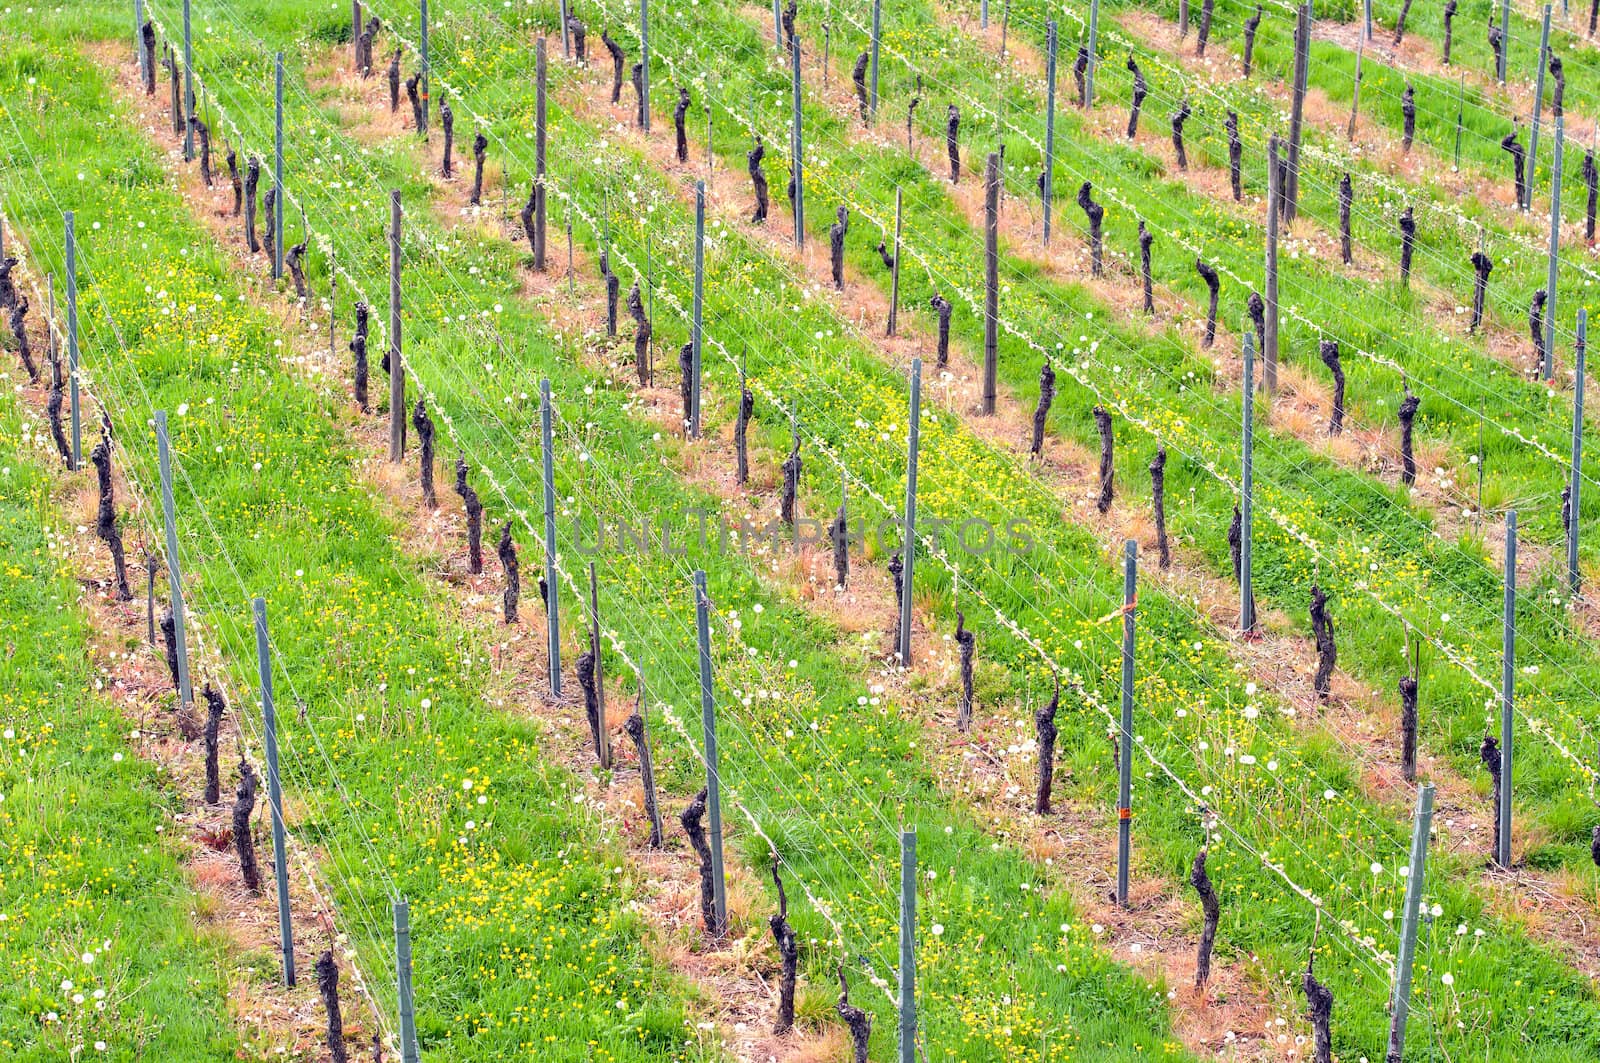 Grape Vines in the Vineyard Field in Spring